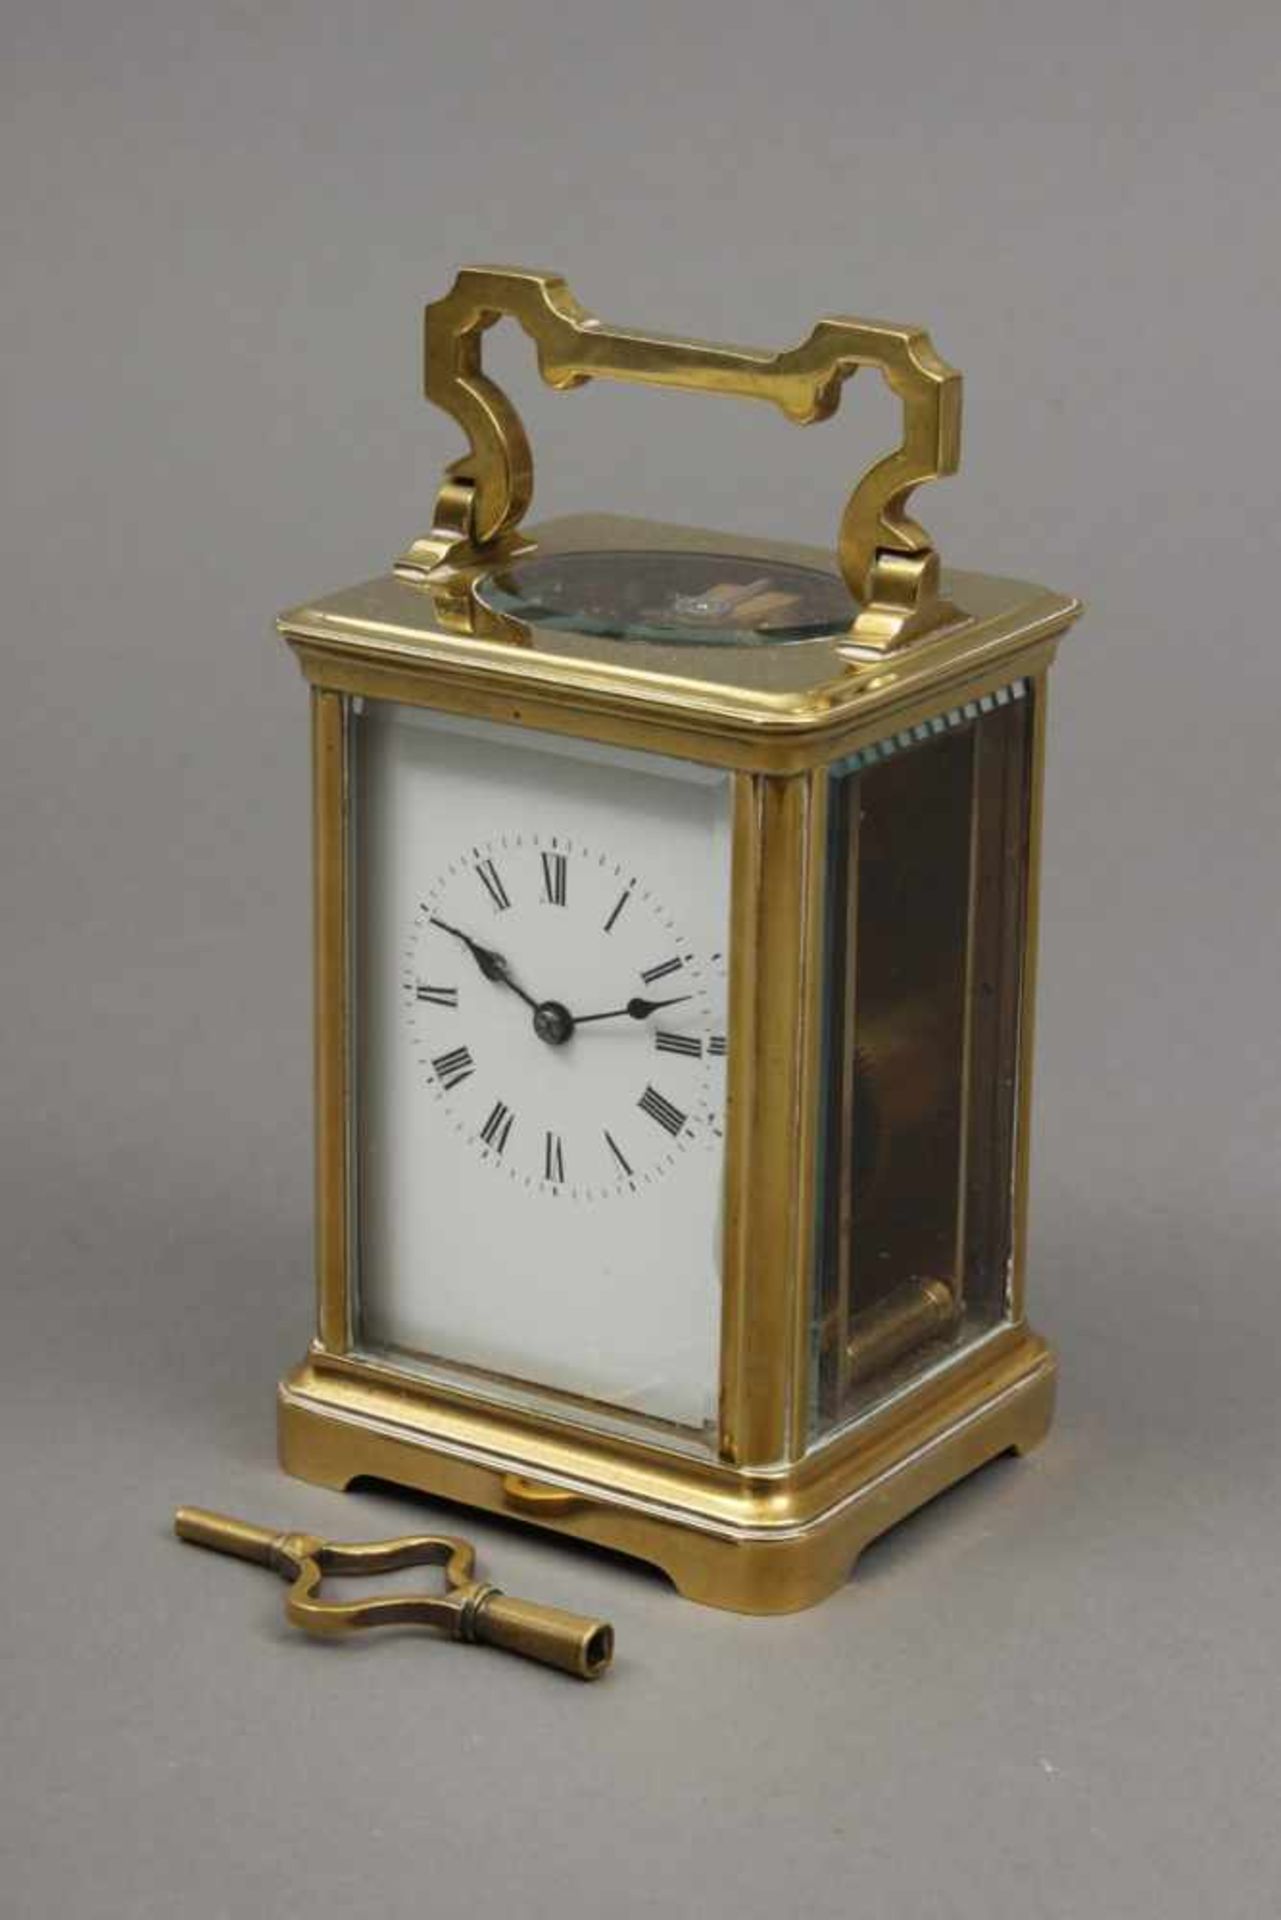 Reiseuhr (¨carriage clock¨)Gehäuse Messing, poliert, wohl England um 1900, allseitig verglast,